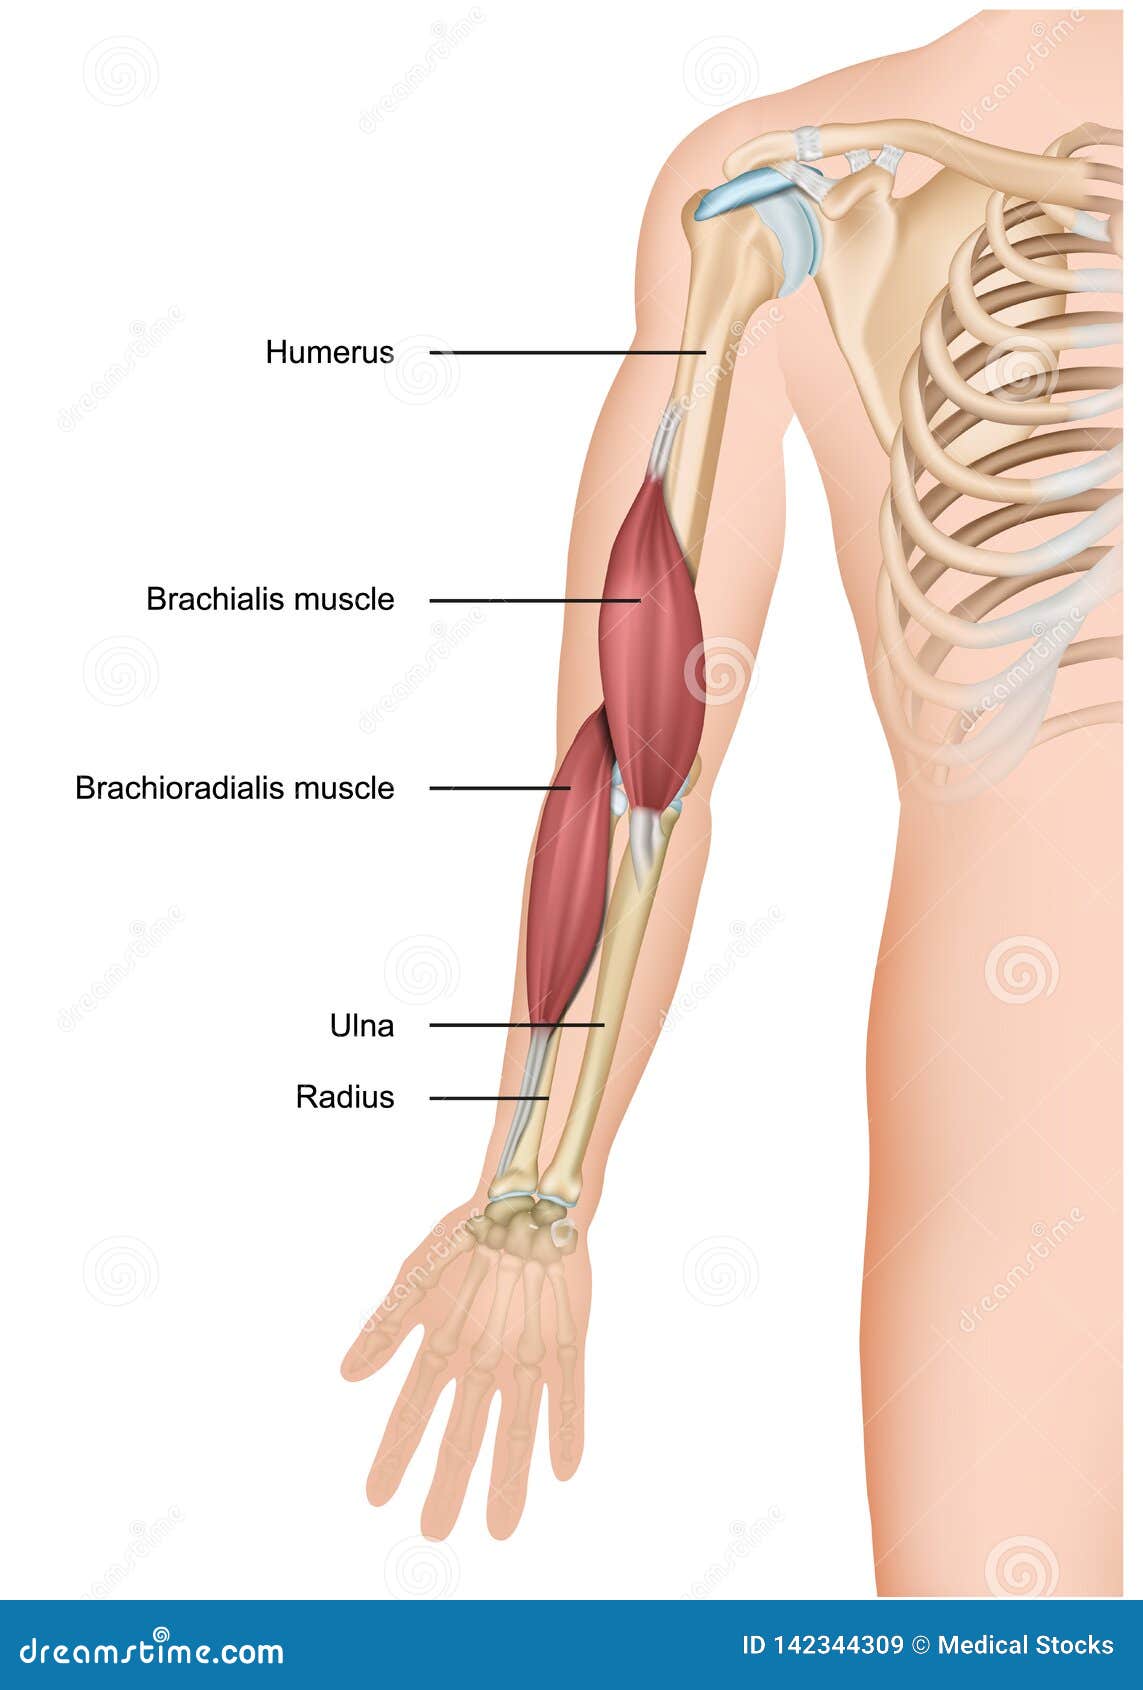 brachialis artrózis kezelést okoz